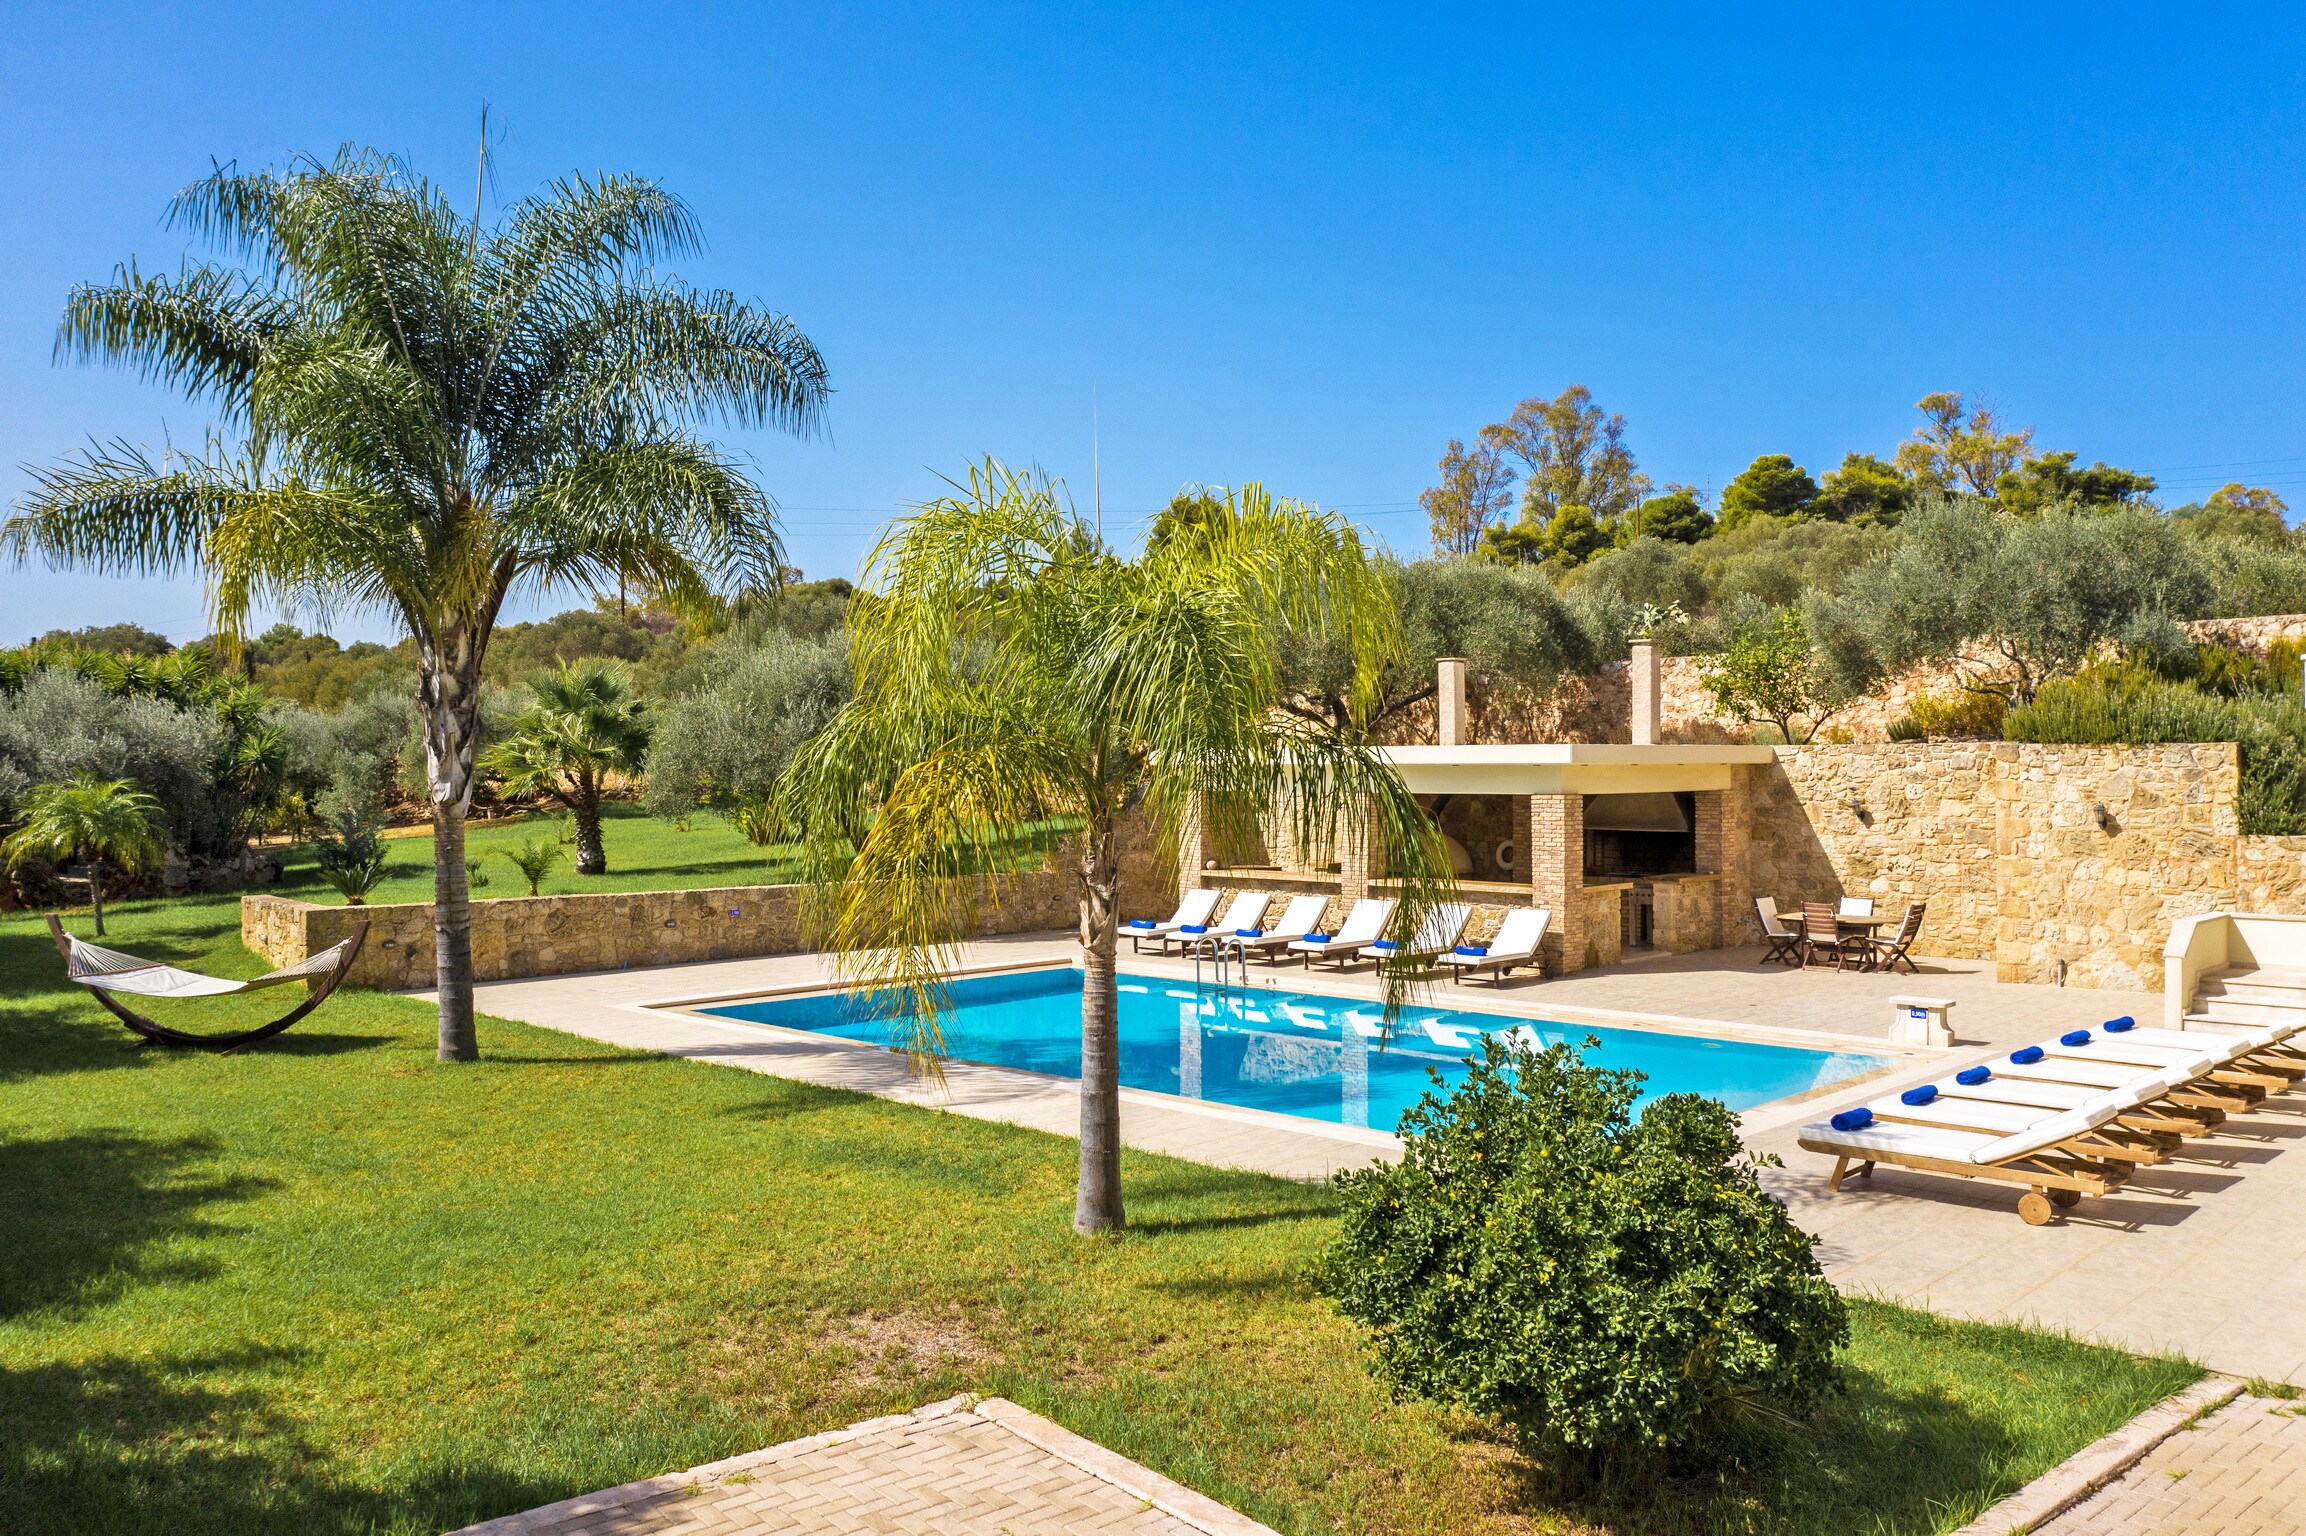 Swimming pool area of large modern villa,Pool,Near Beach,Souda,Chania,Crete